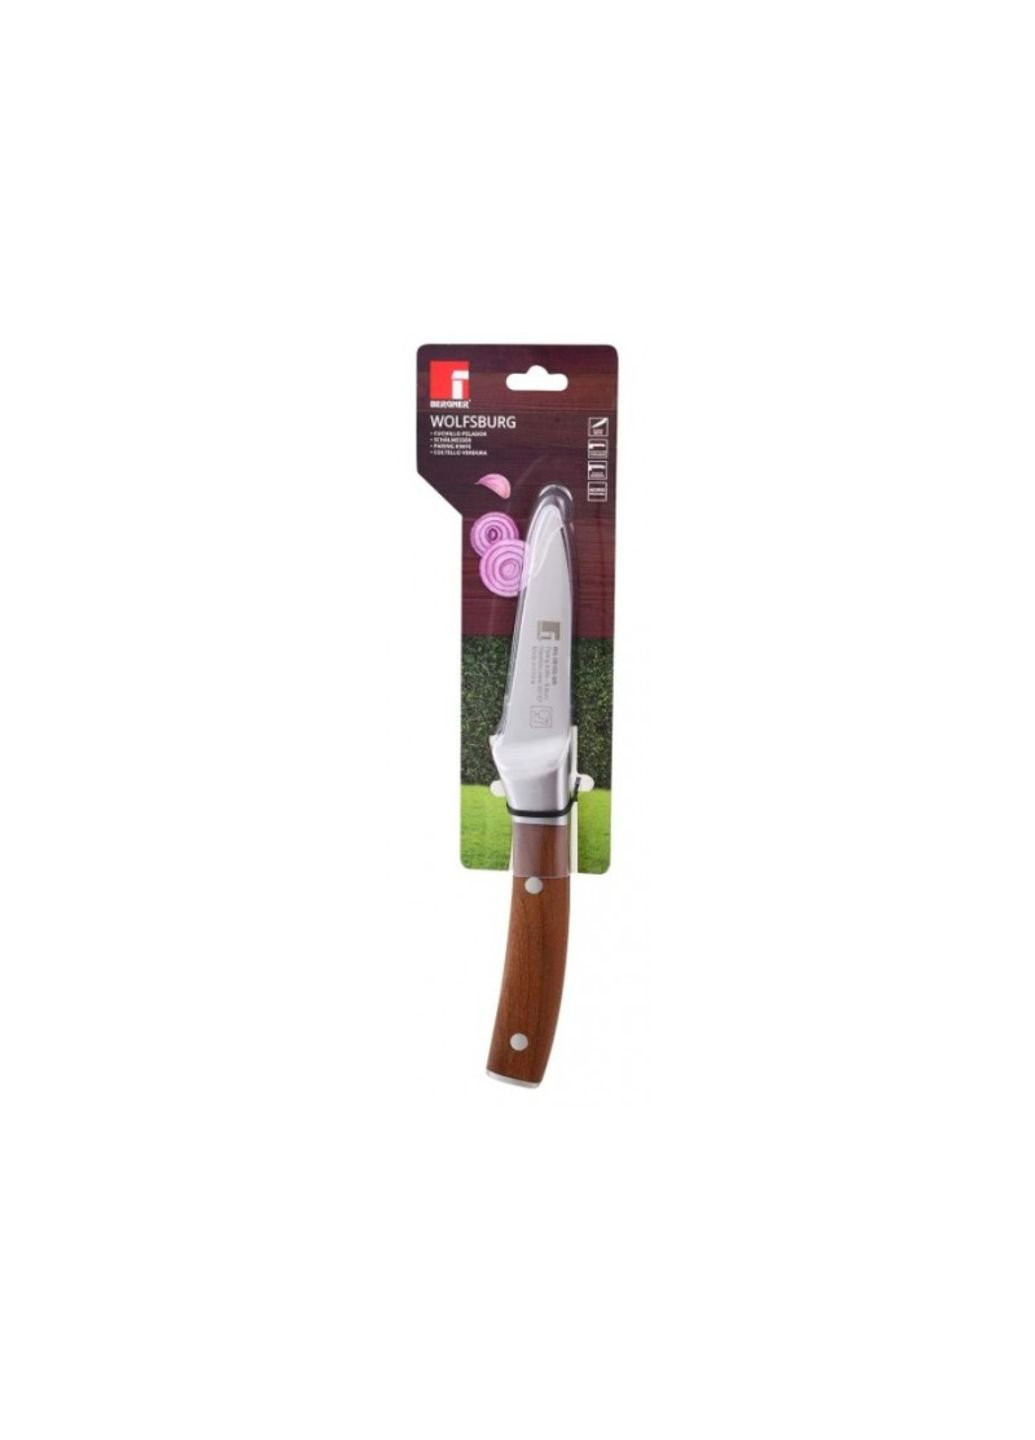 Нож овощной BG-39165-BR 8,75 см Bergner (253631760)